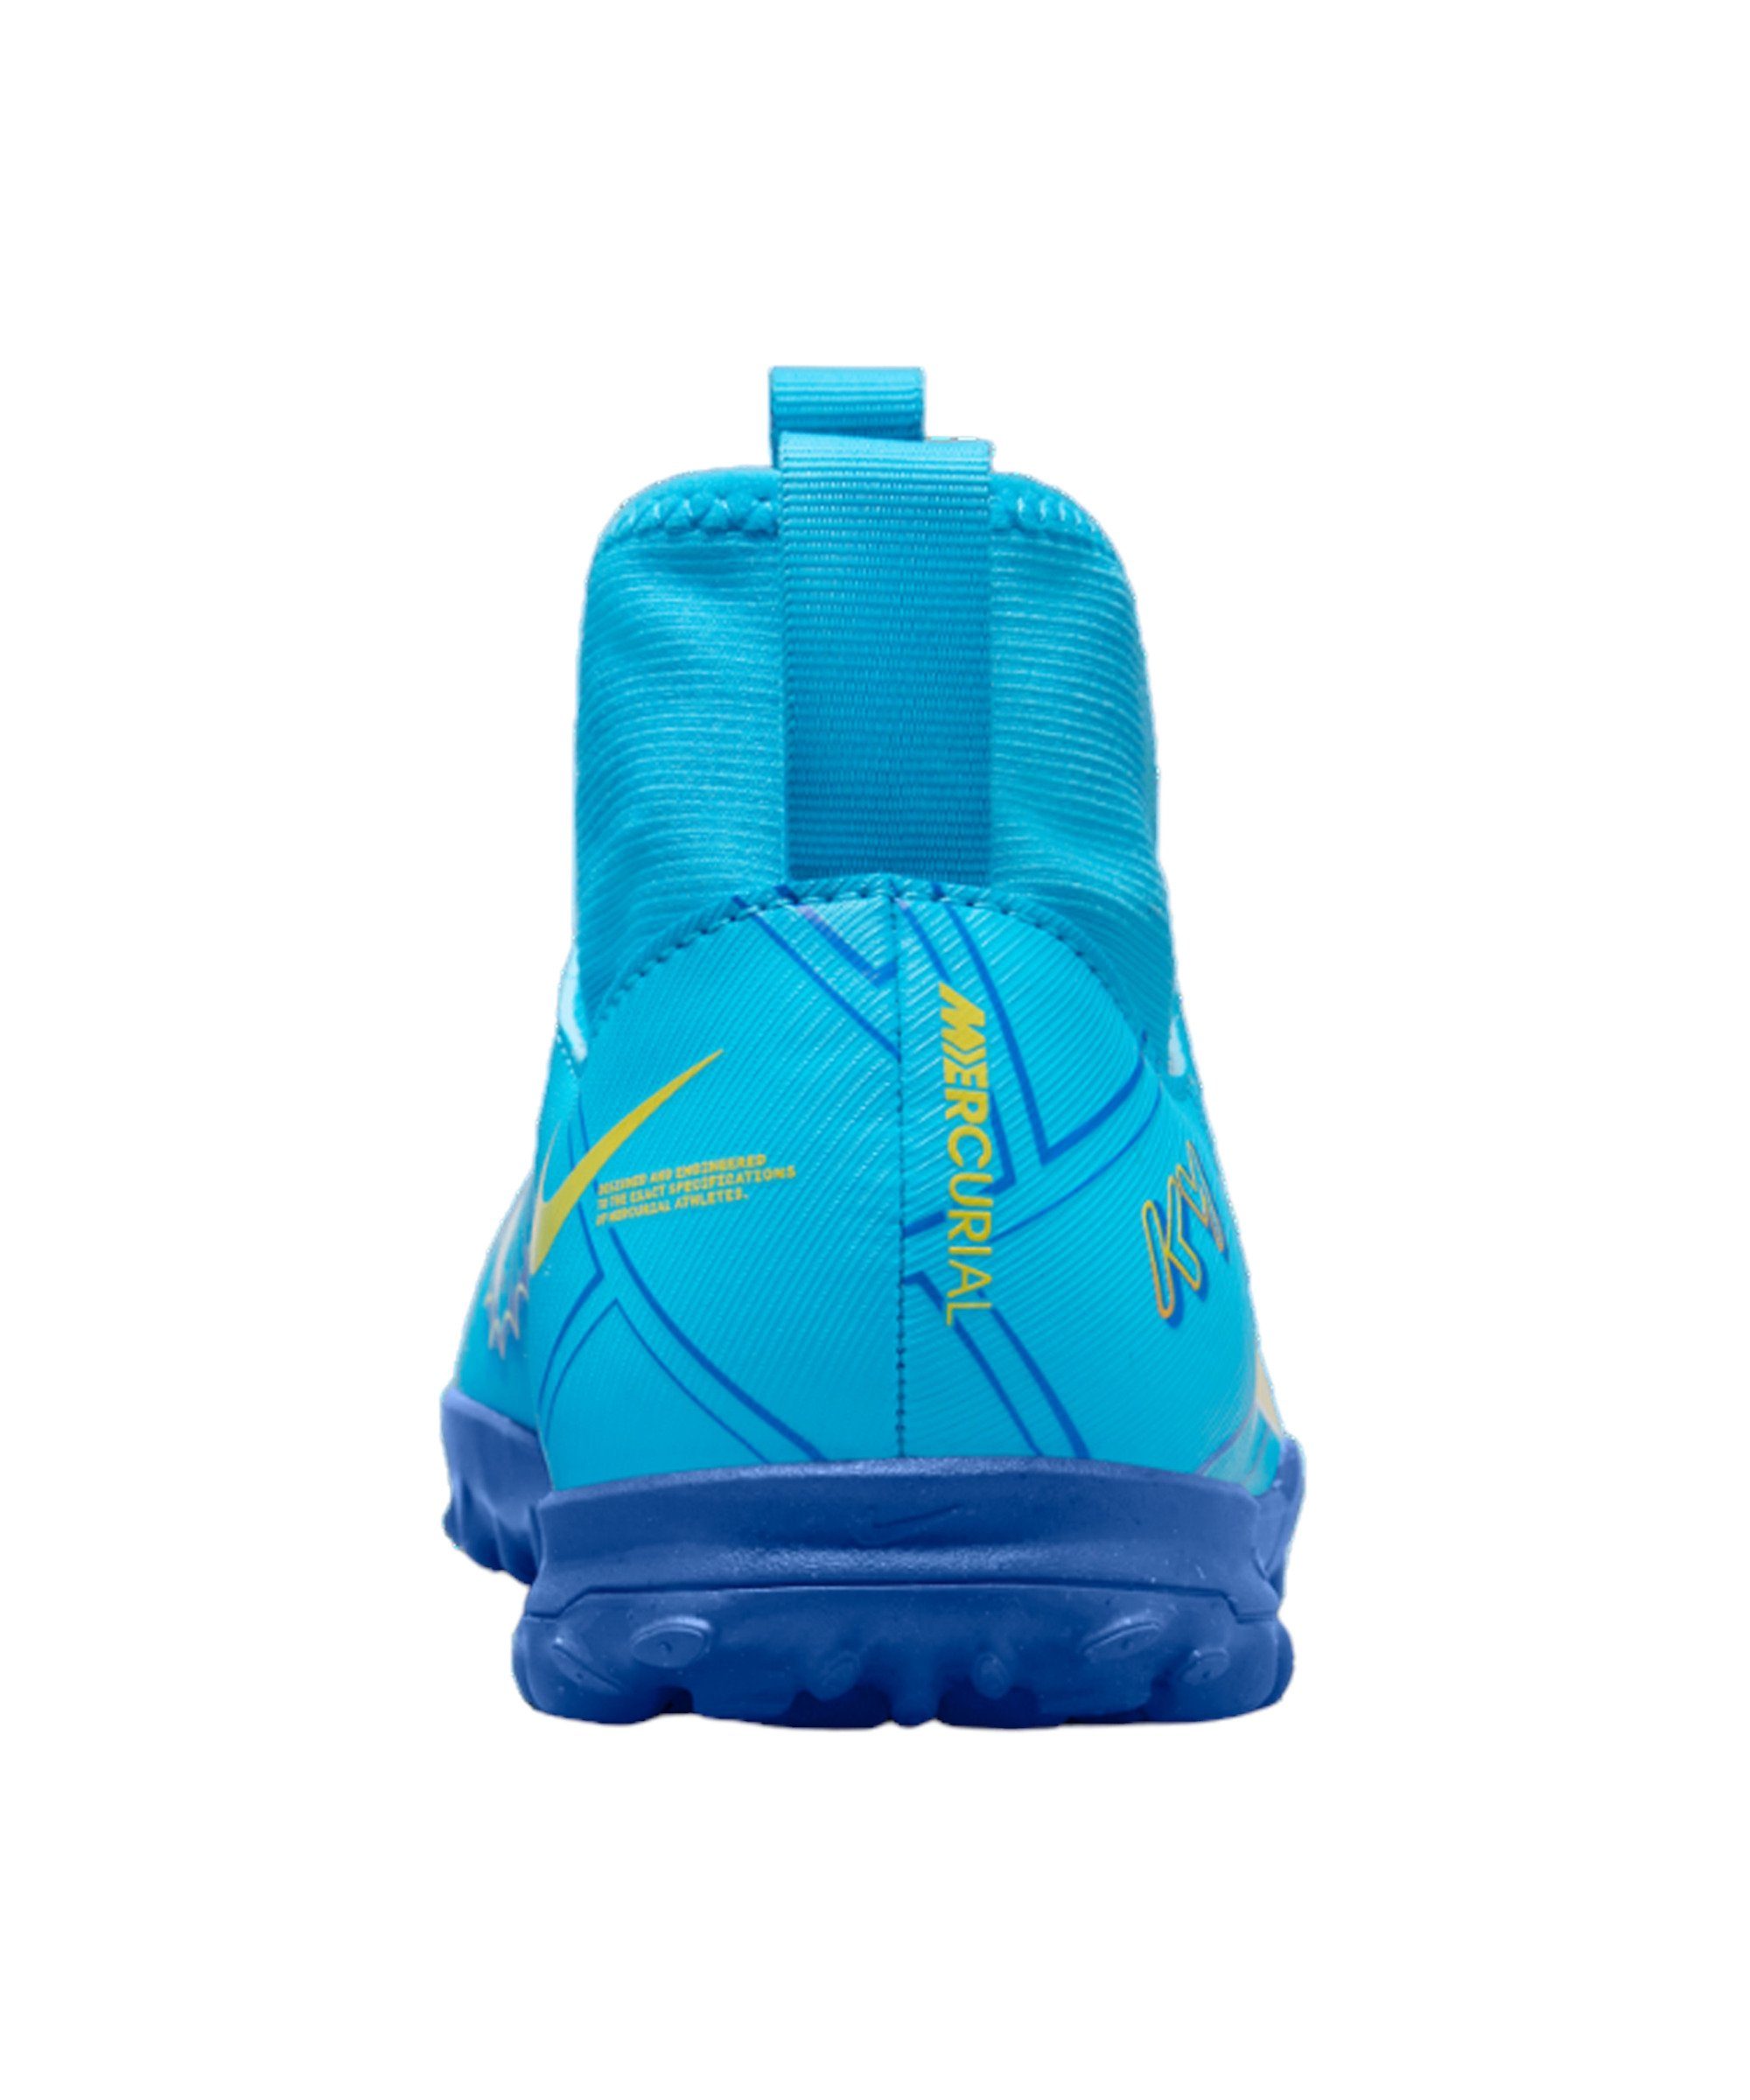 Nike Jr Air Academy Shadow Kids blauweiss Fußballschuh Zoom Superfly Mercurial IX TF